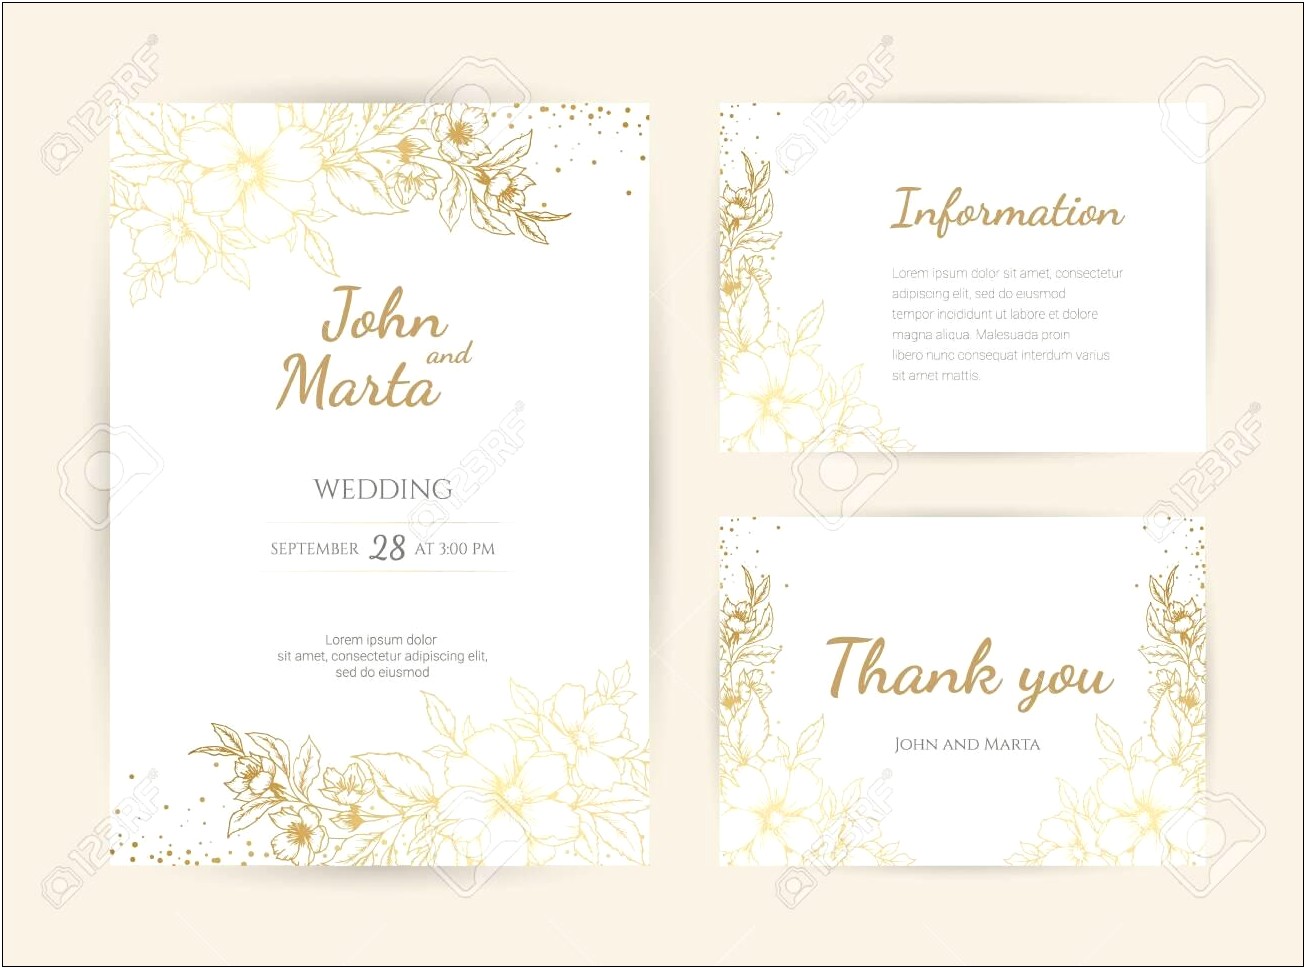 Lovely Floral Wedding Invitation With Golden Frame